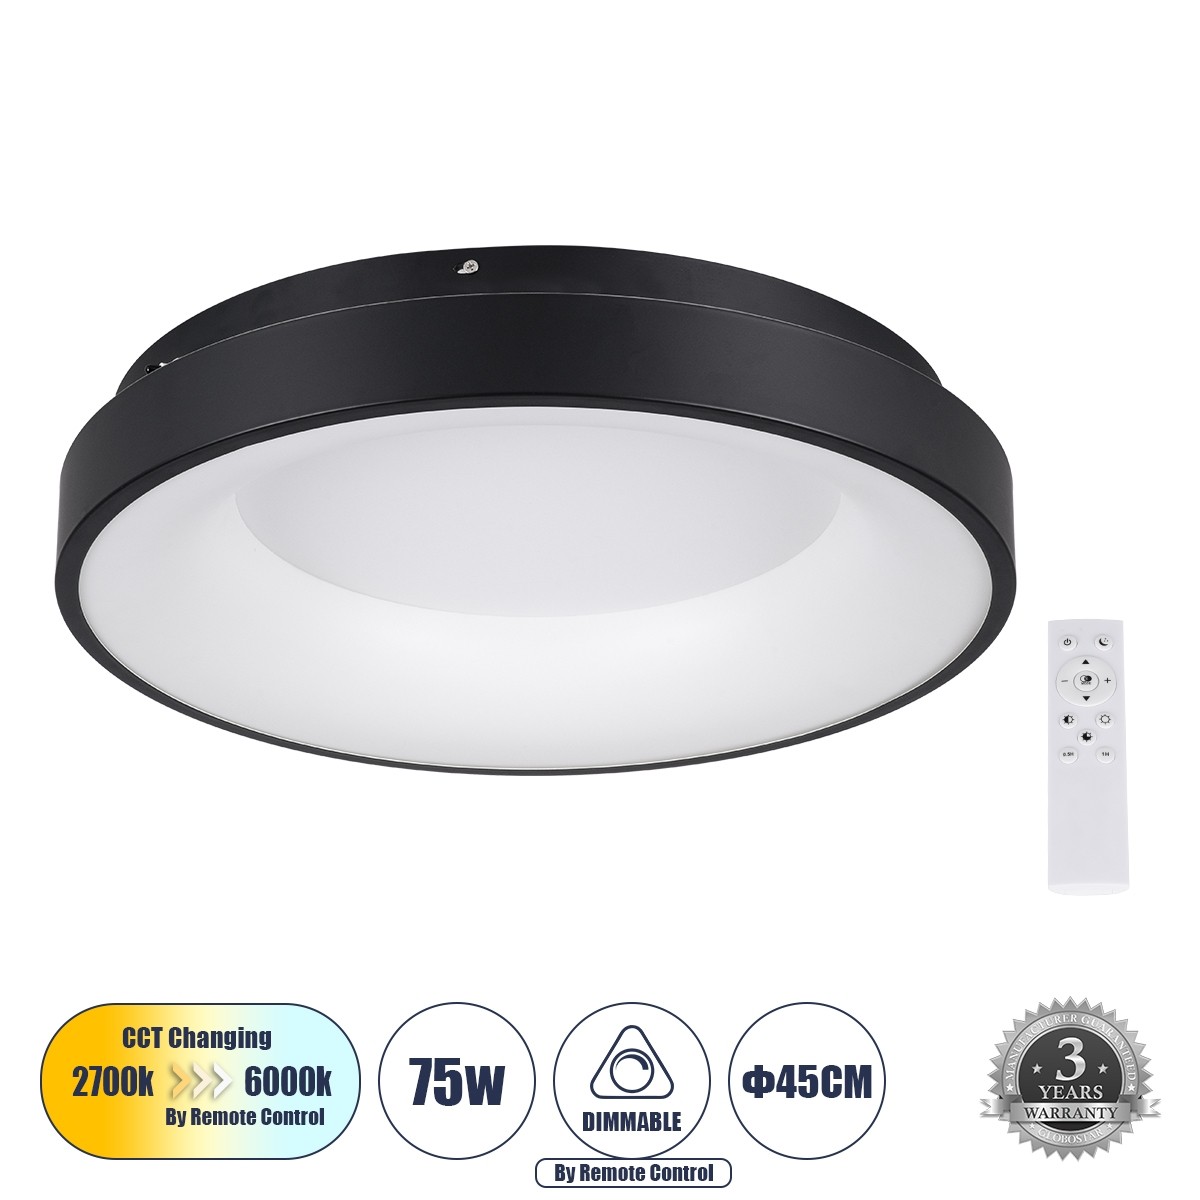 LED Πλαφονιέρα Οροφής SALEM 75W με Εναλλαγή Φωτισμού Dimmable Φ45cm - Μαύρο 61233